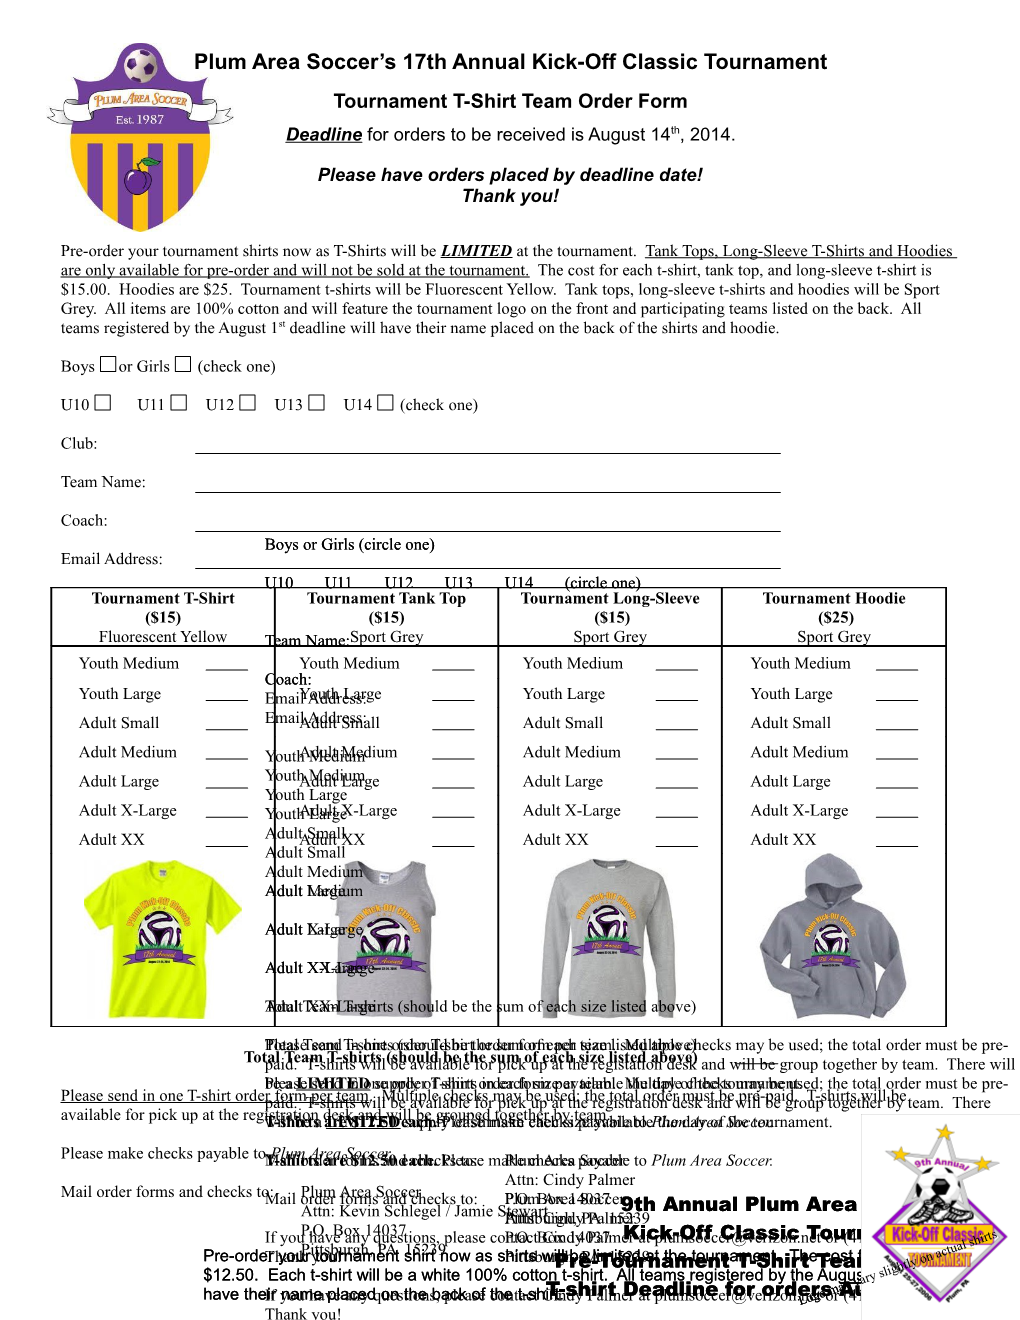 Tournament T-Shirt Team Order Form